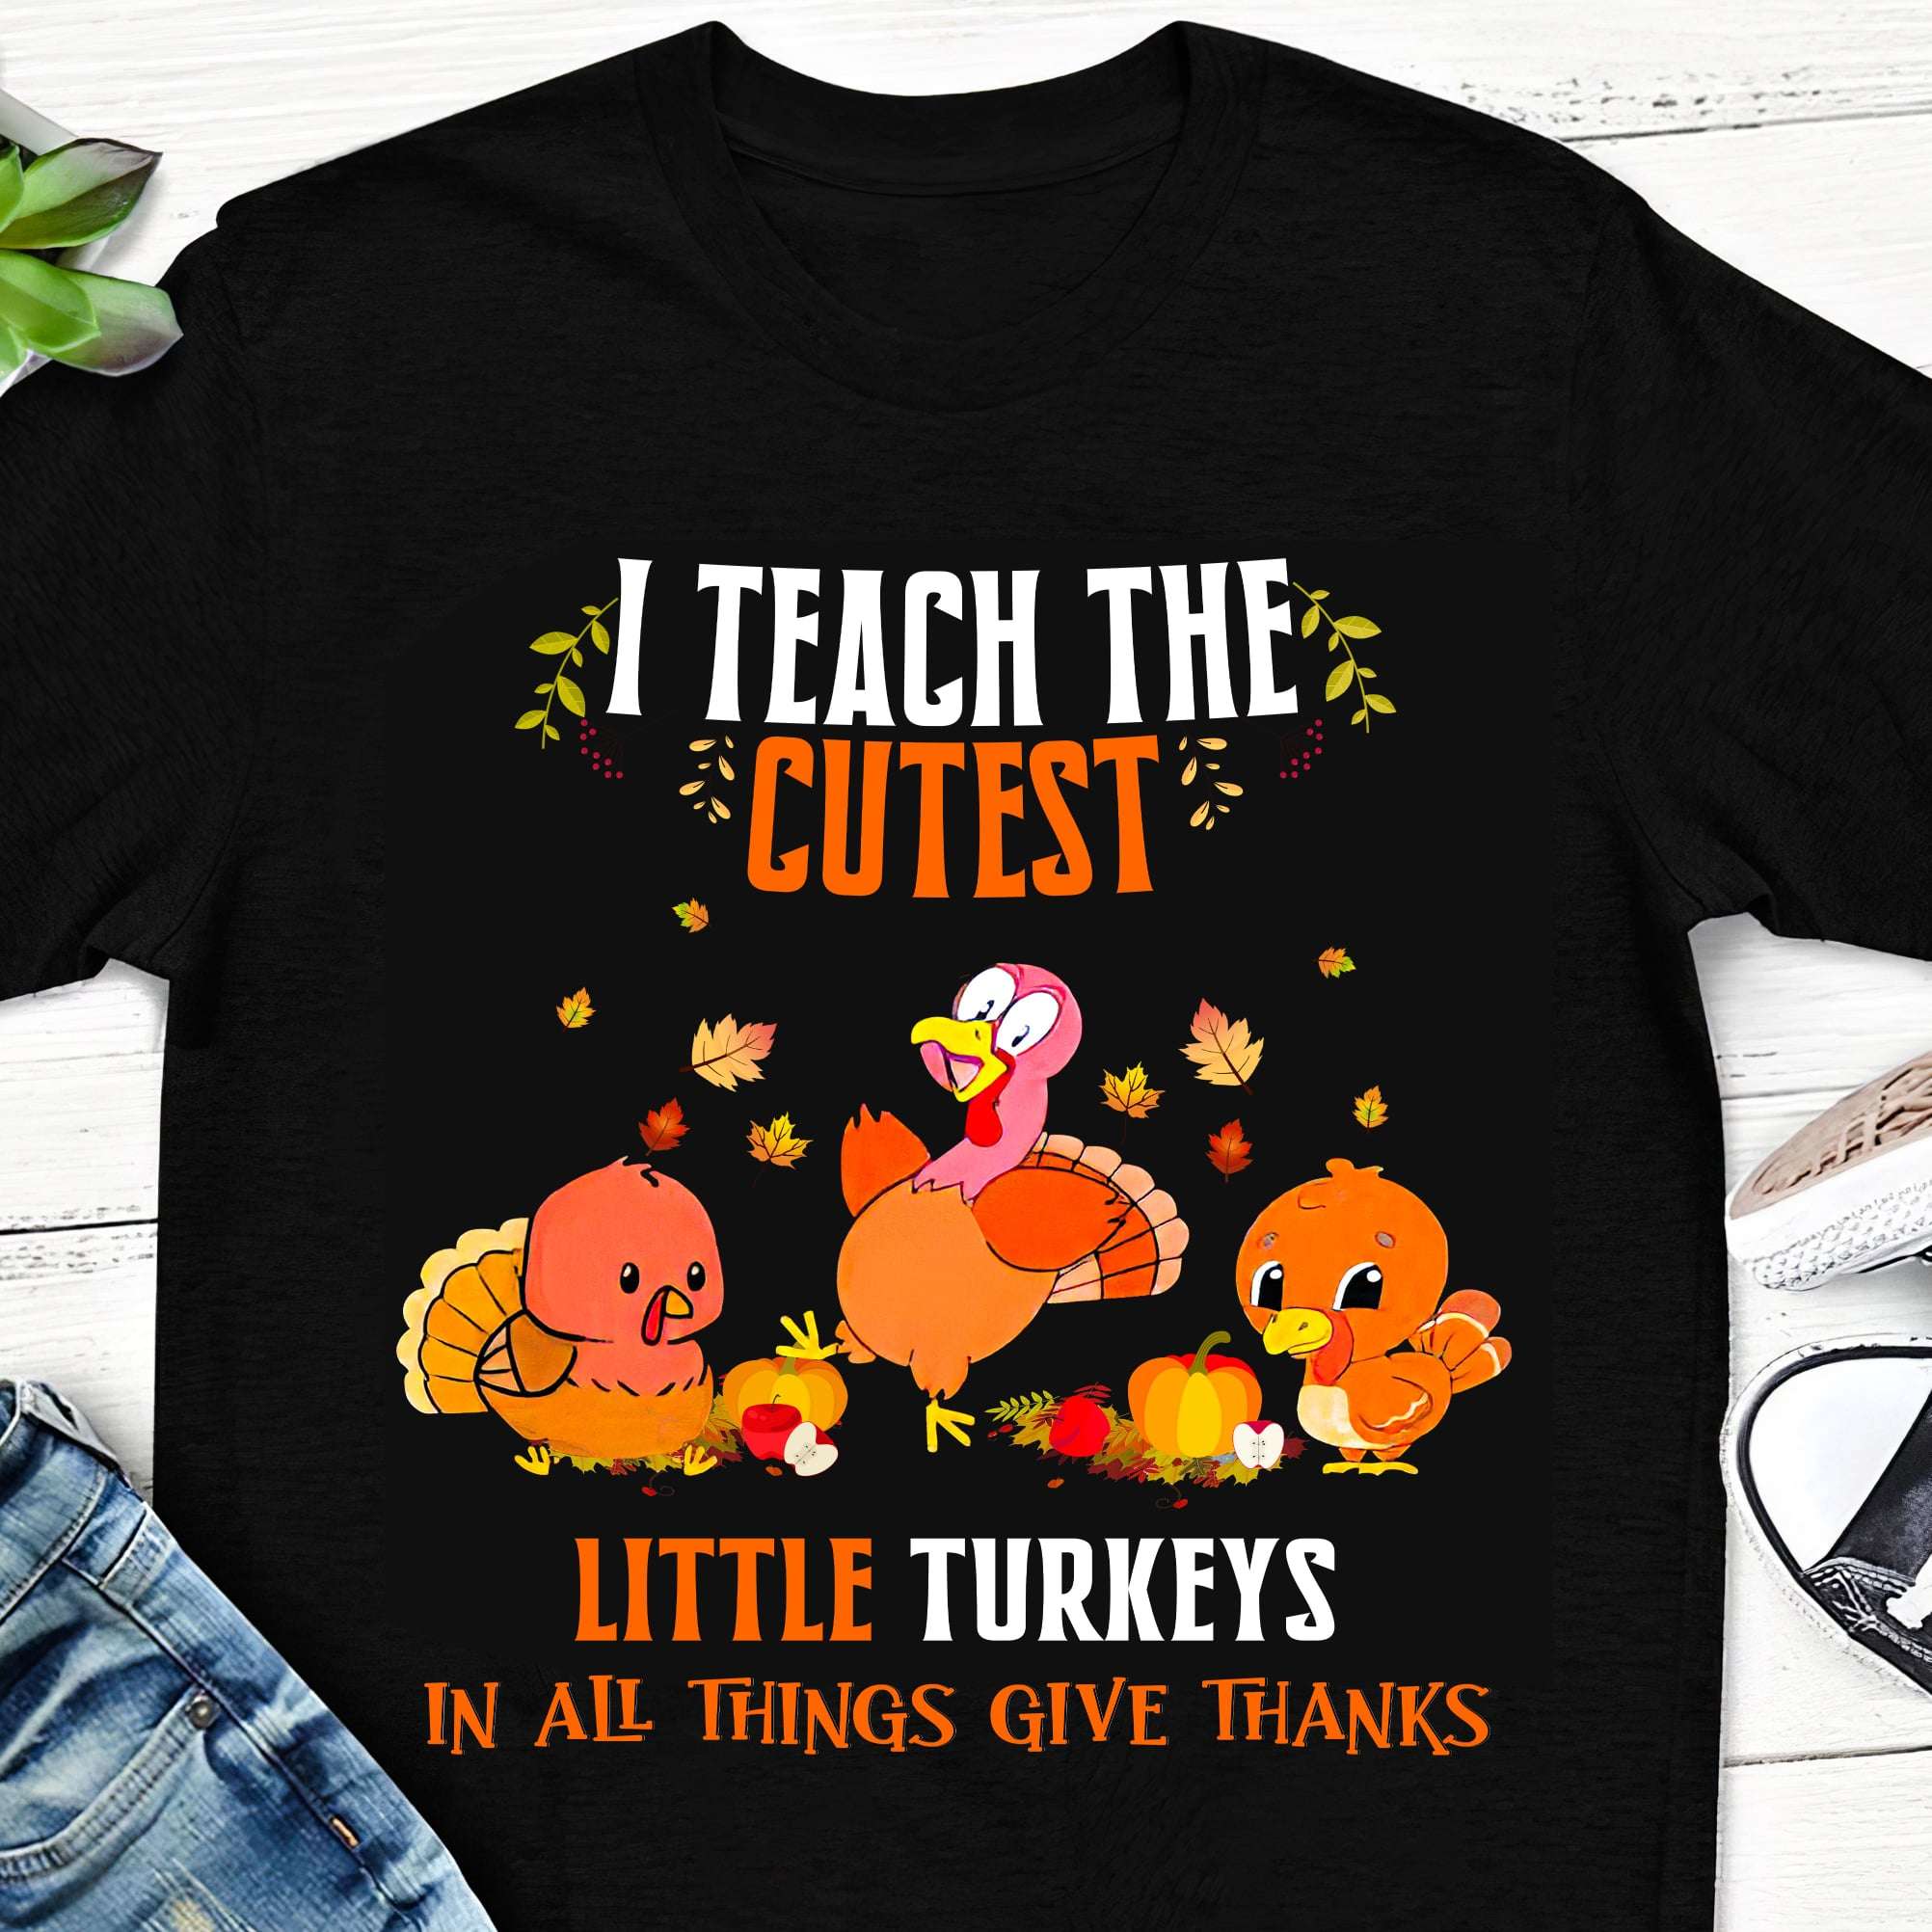 Little Turkeys - I teach the cutest little turkeys in all things give thanks